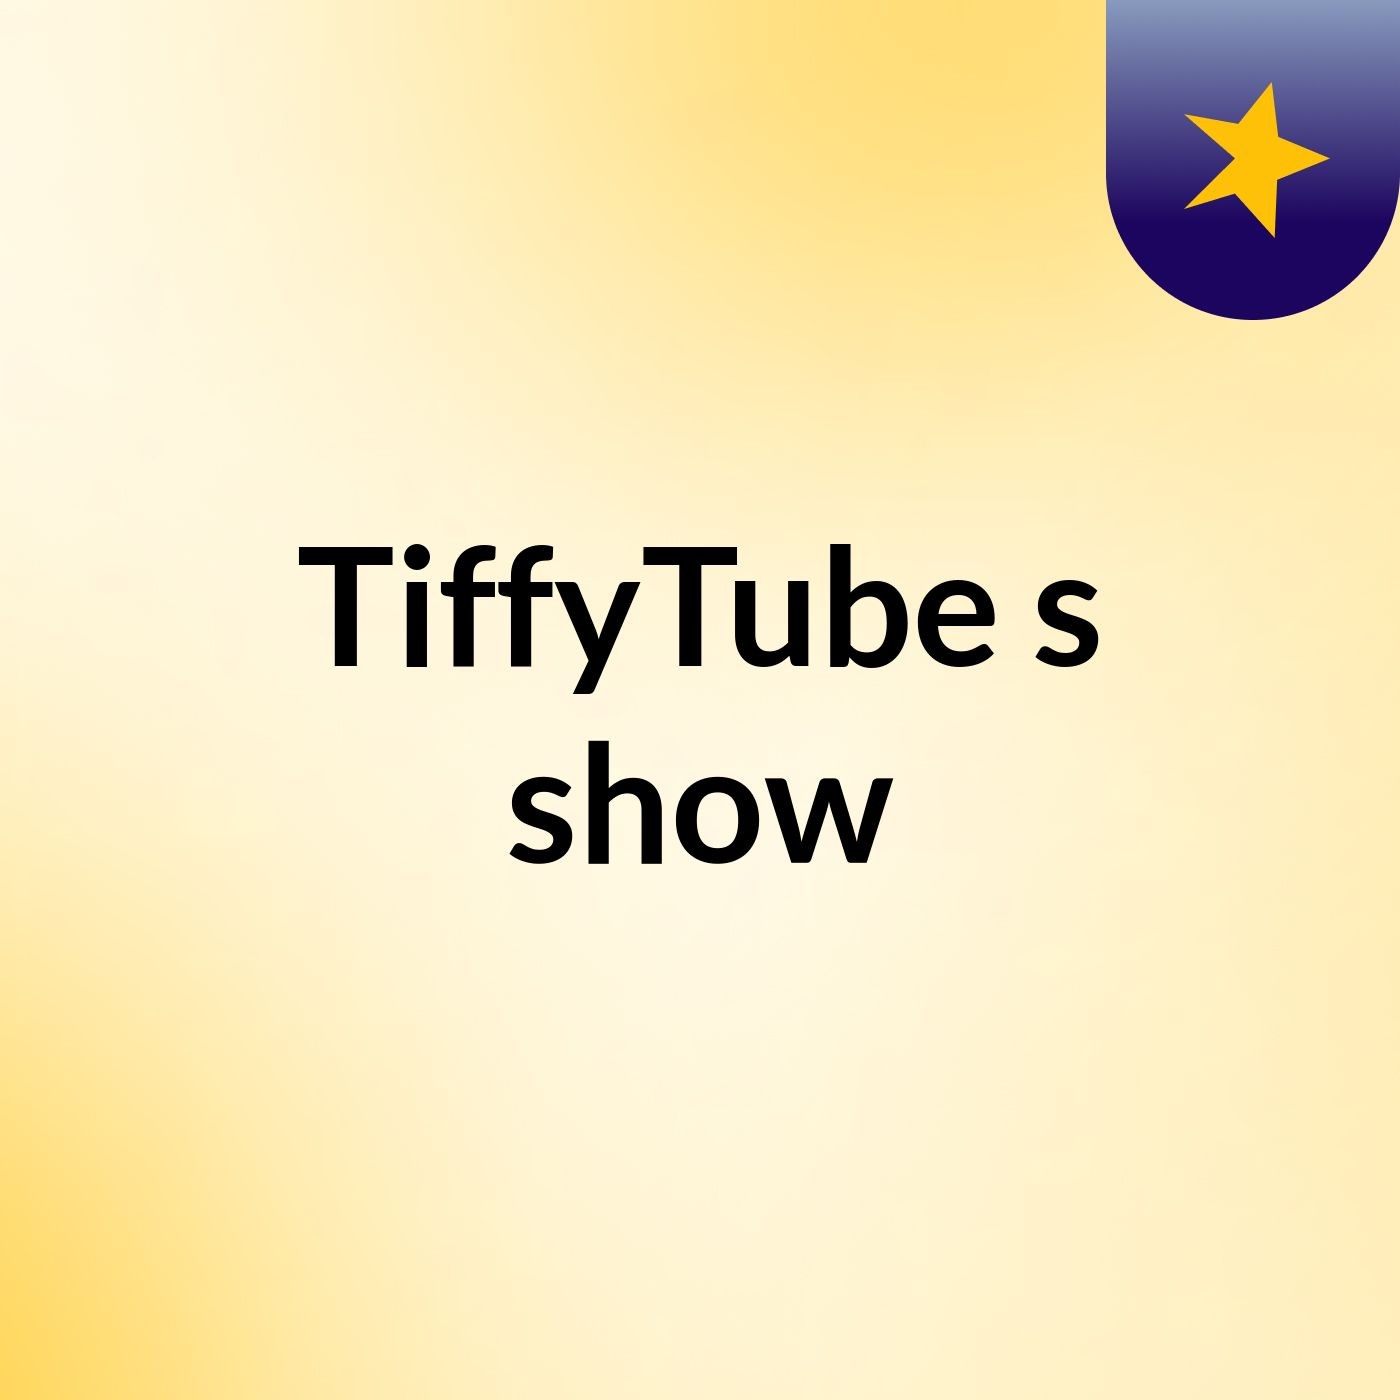 TiffyTube's show